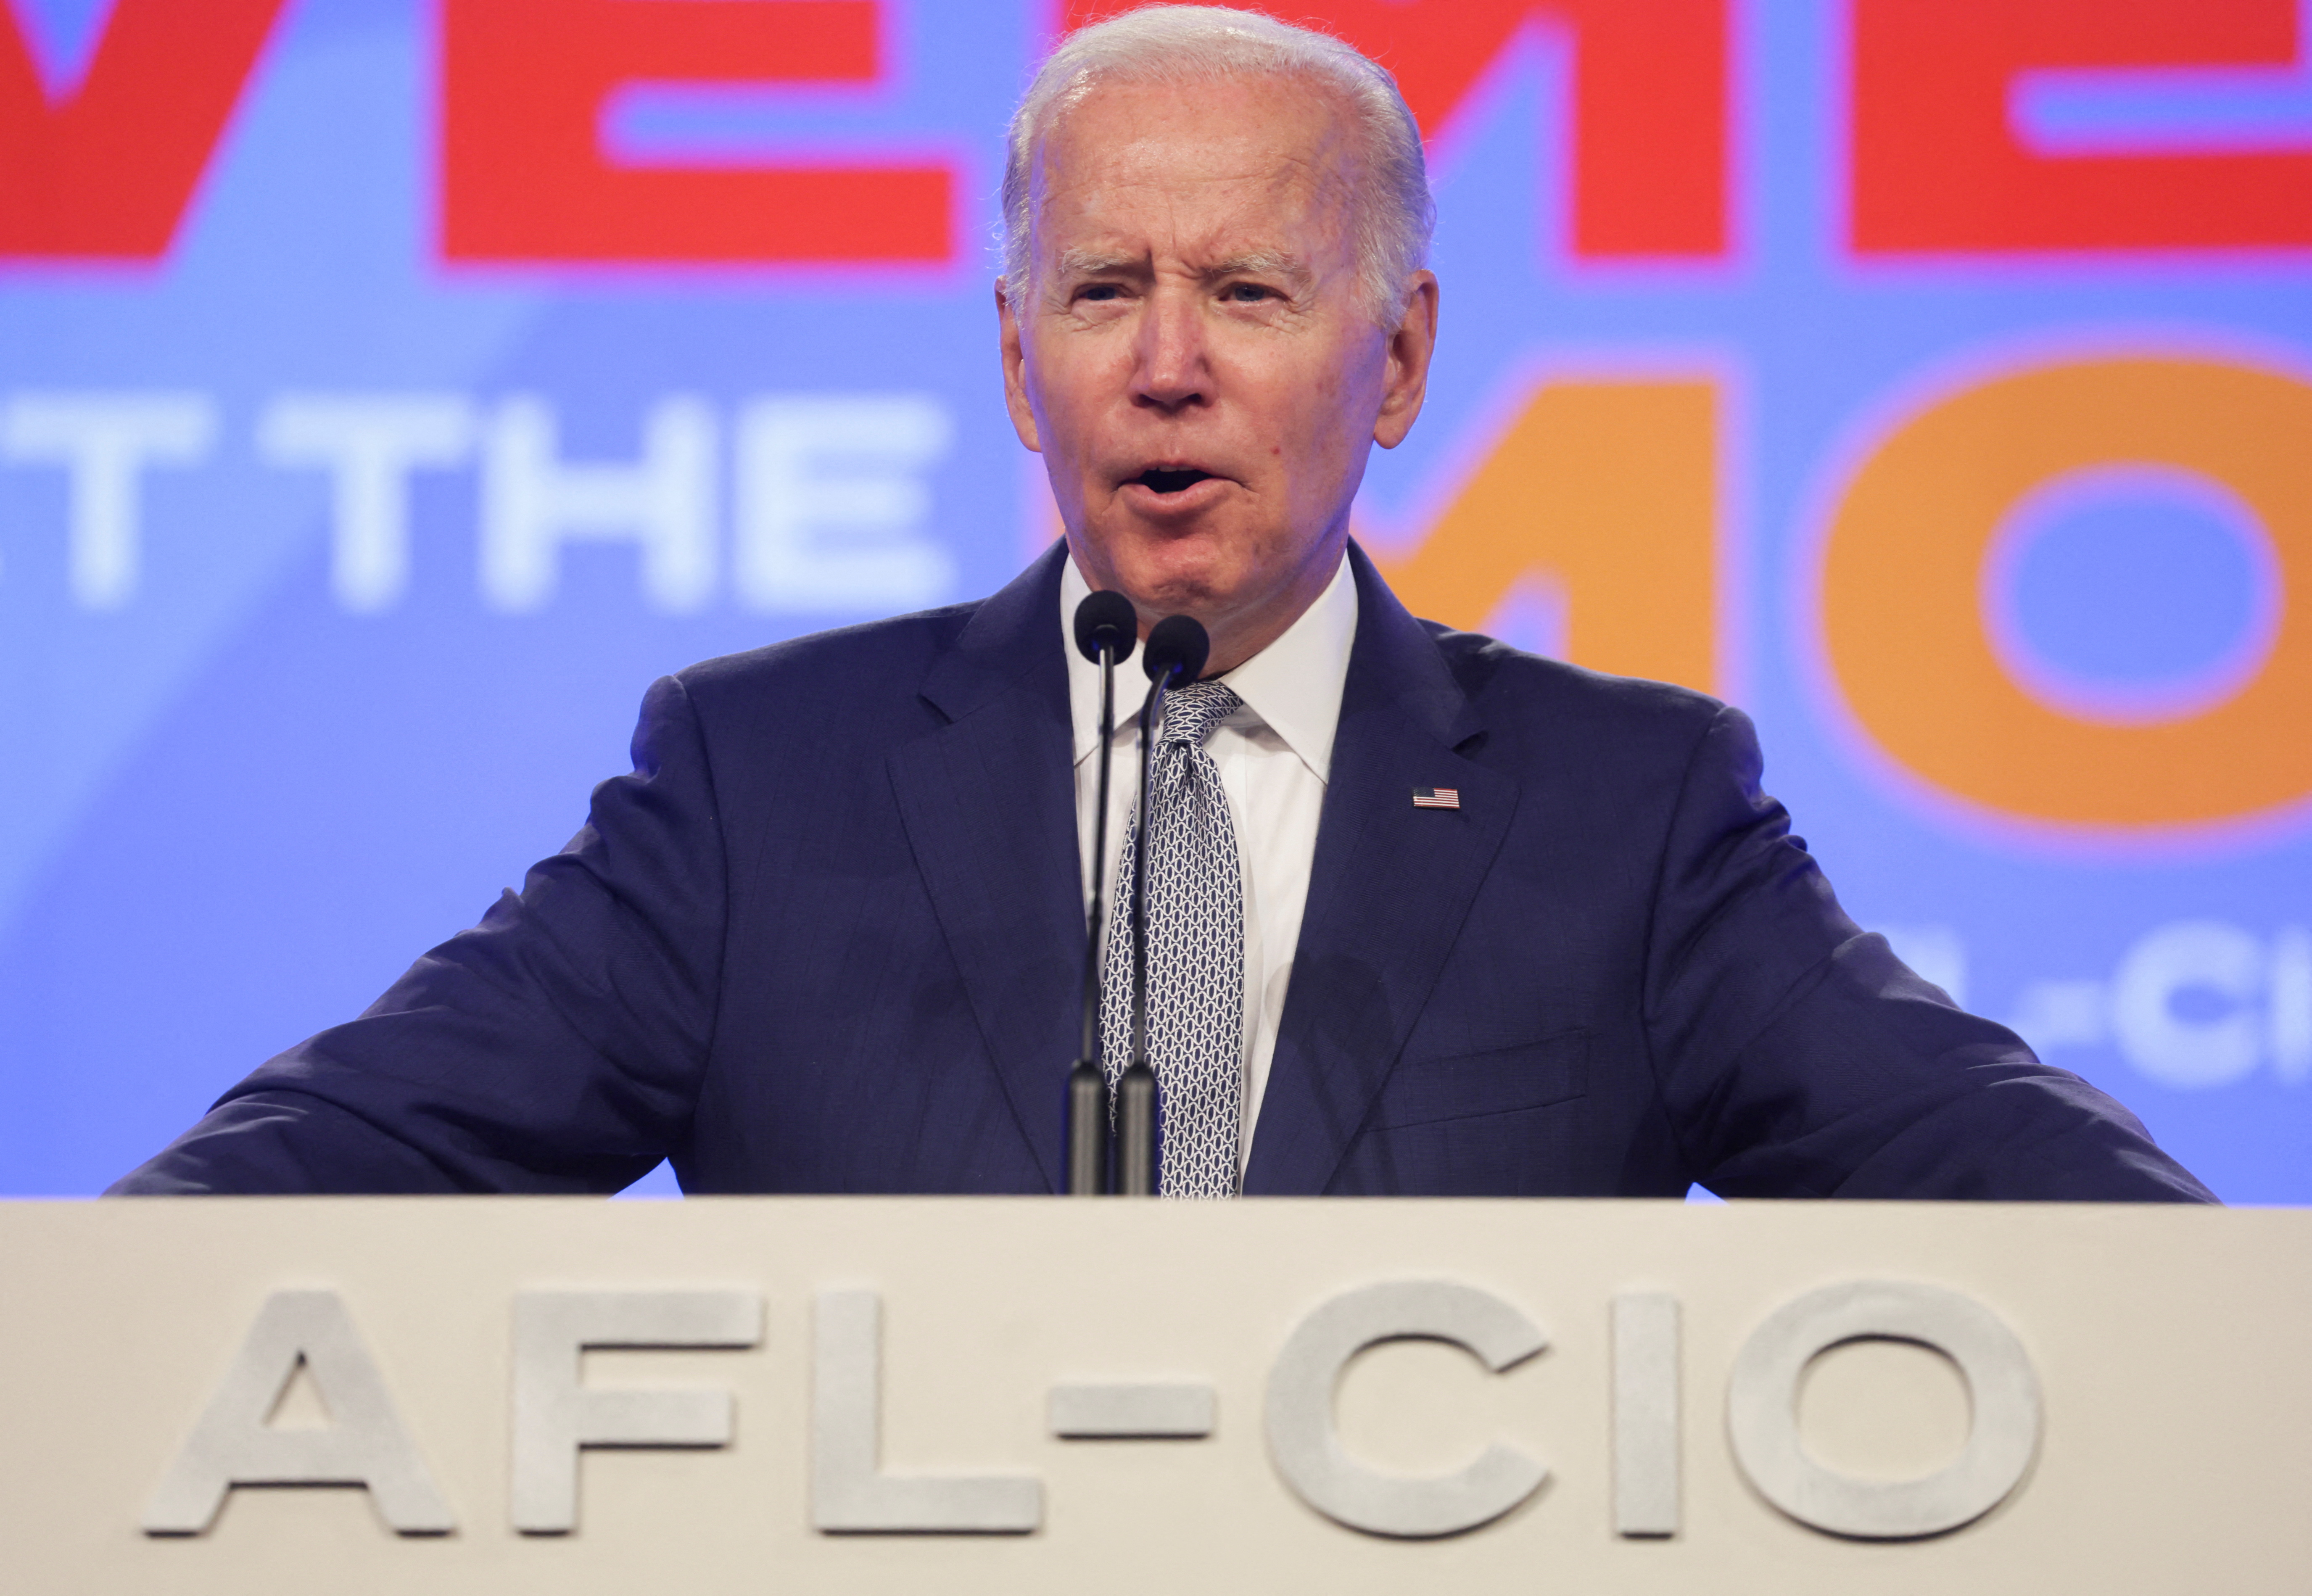 U.S. President Biden delivers remarks at the 29th AFL-CIO Quadrennial Constitutional Convention, in Philadelphia